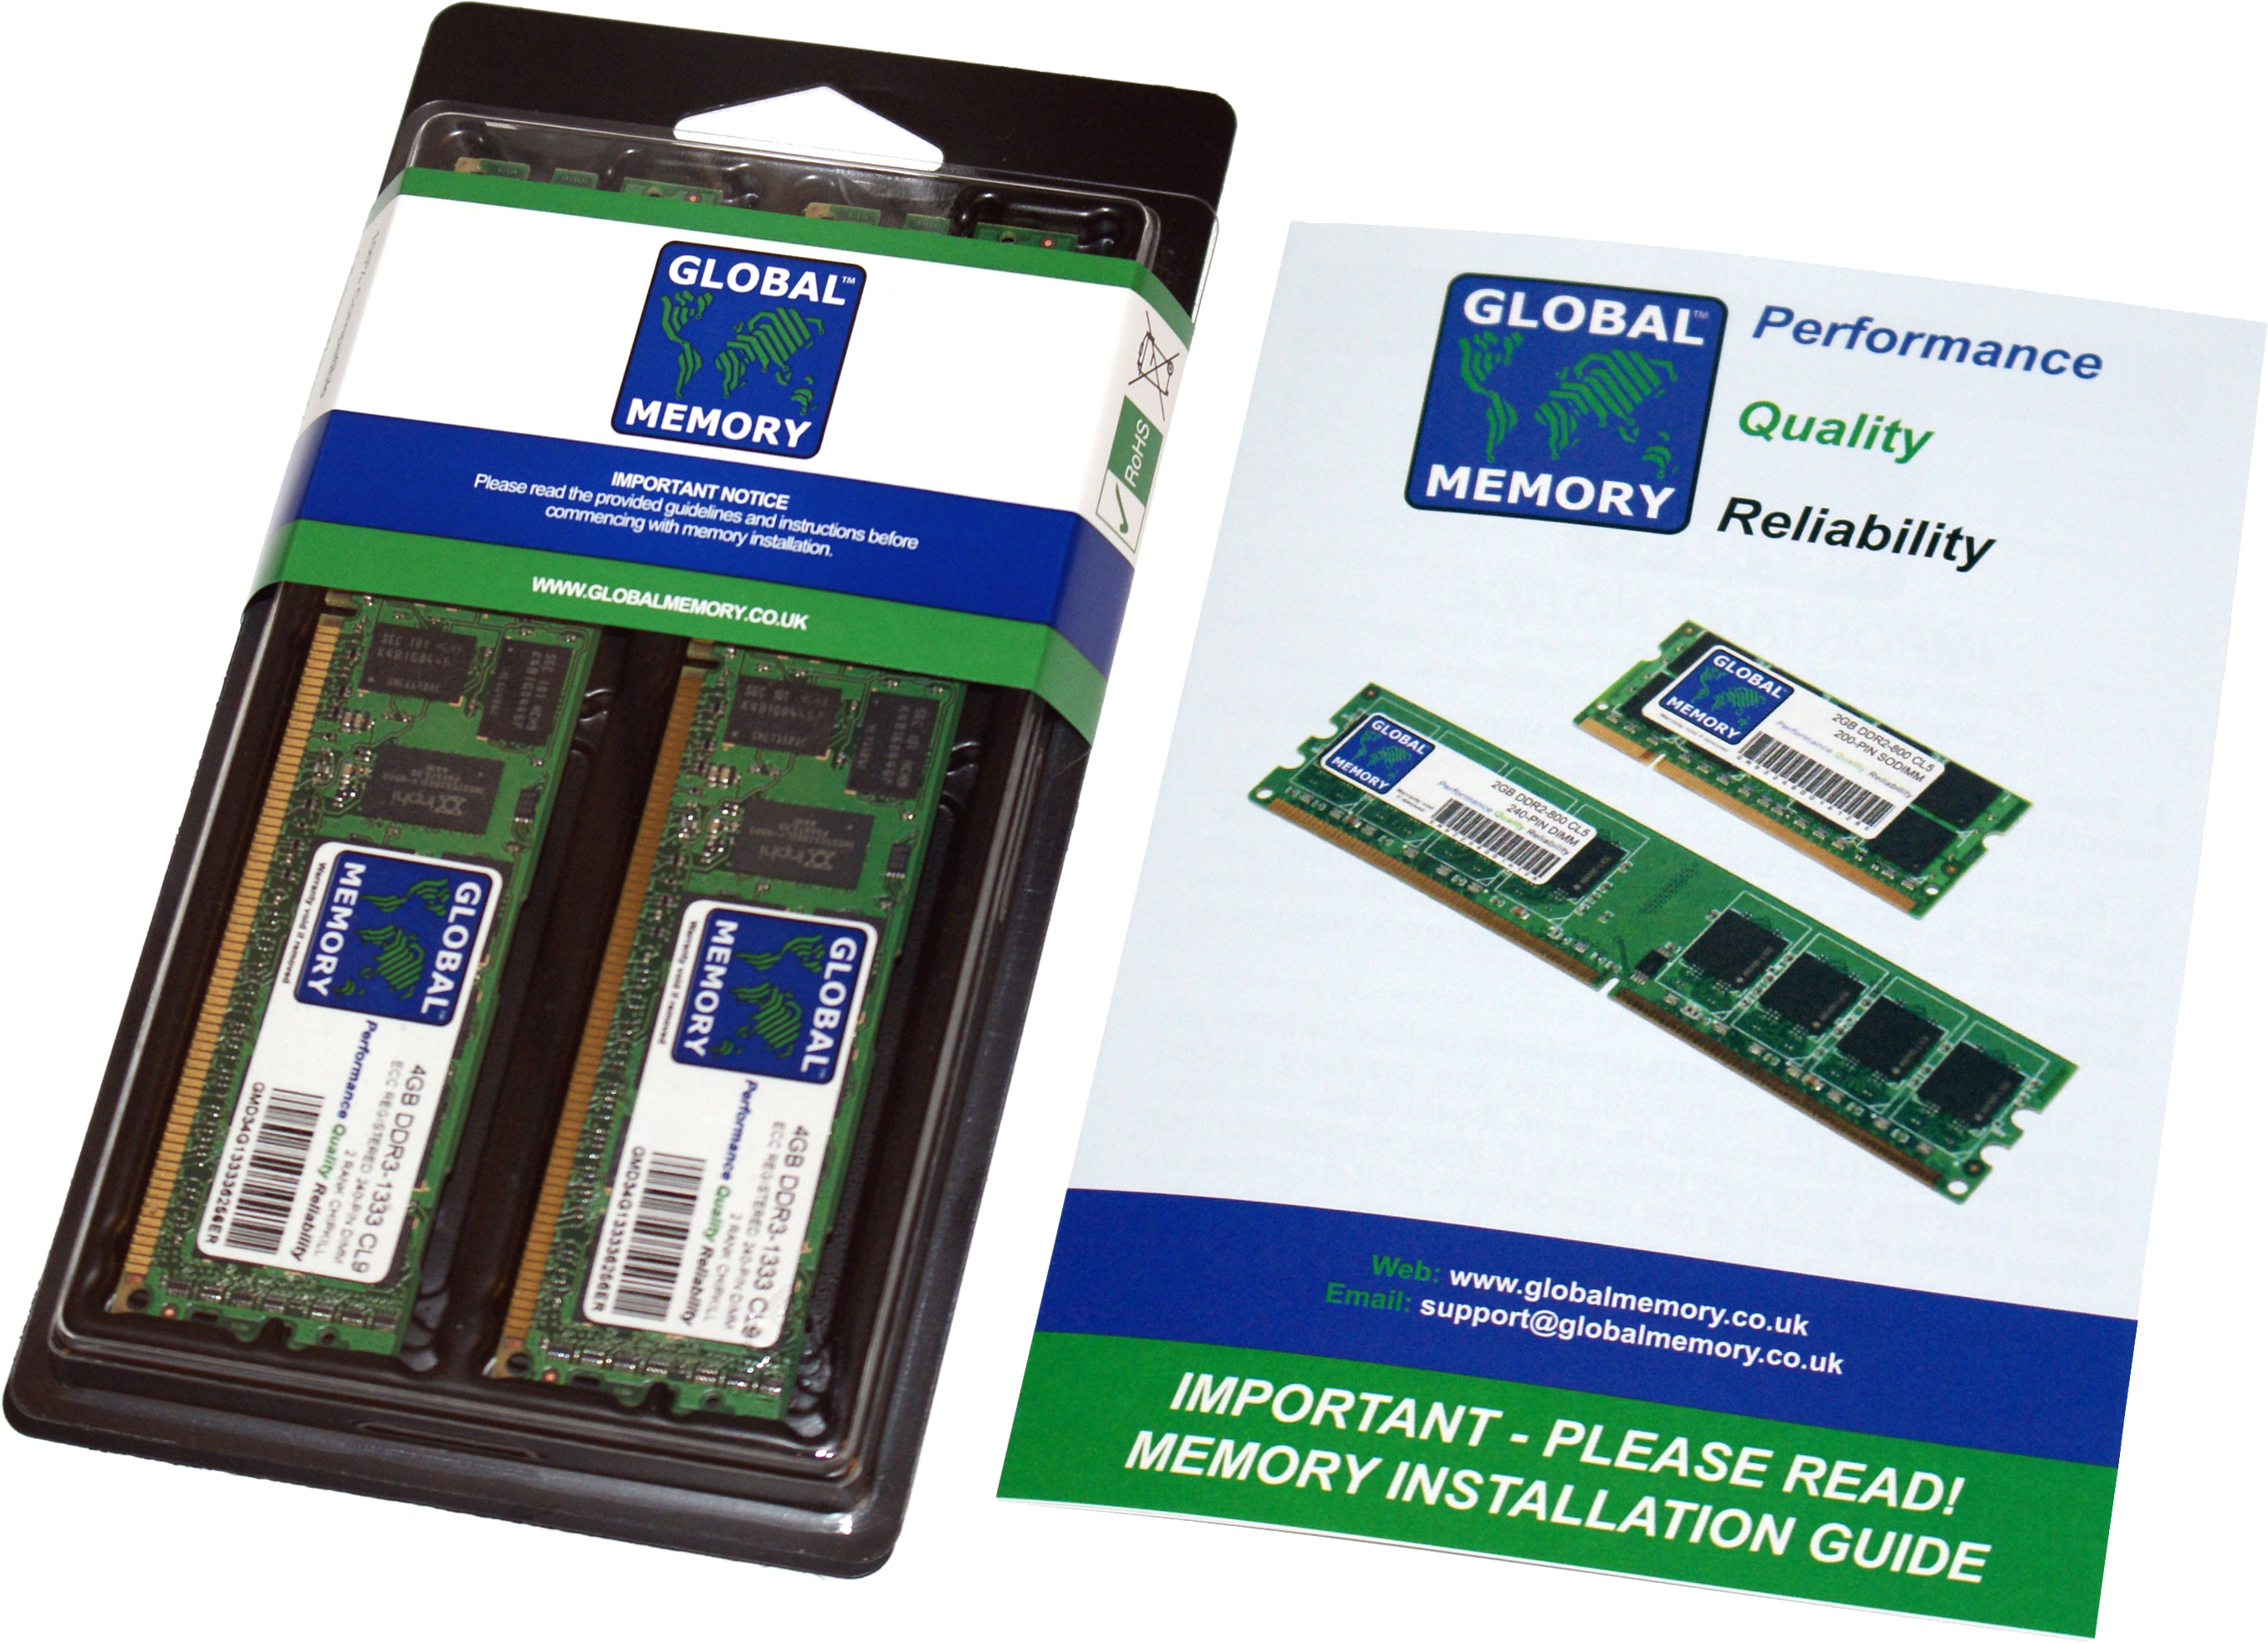 128GB (2 x 64GB) DDR4 2933MHz PC4-23400 288-PIN LOAD REDUCED ECC REGISTERED DIMM (LRDIMM) MEMORY RAM KIT FOR DELL SERVERS/WORKSTATIONS (8 RANK KIT CHIPKILL)